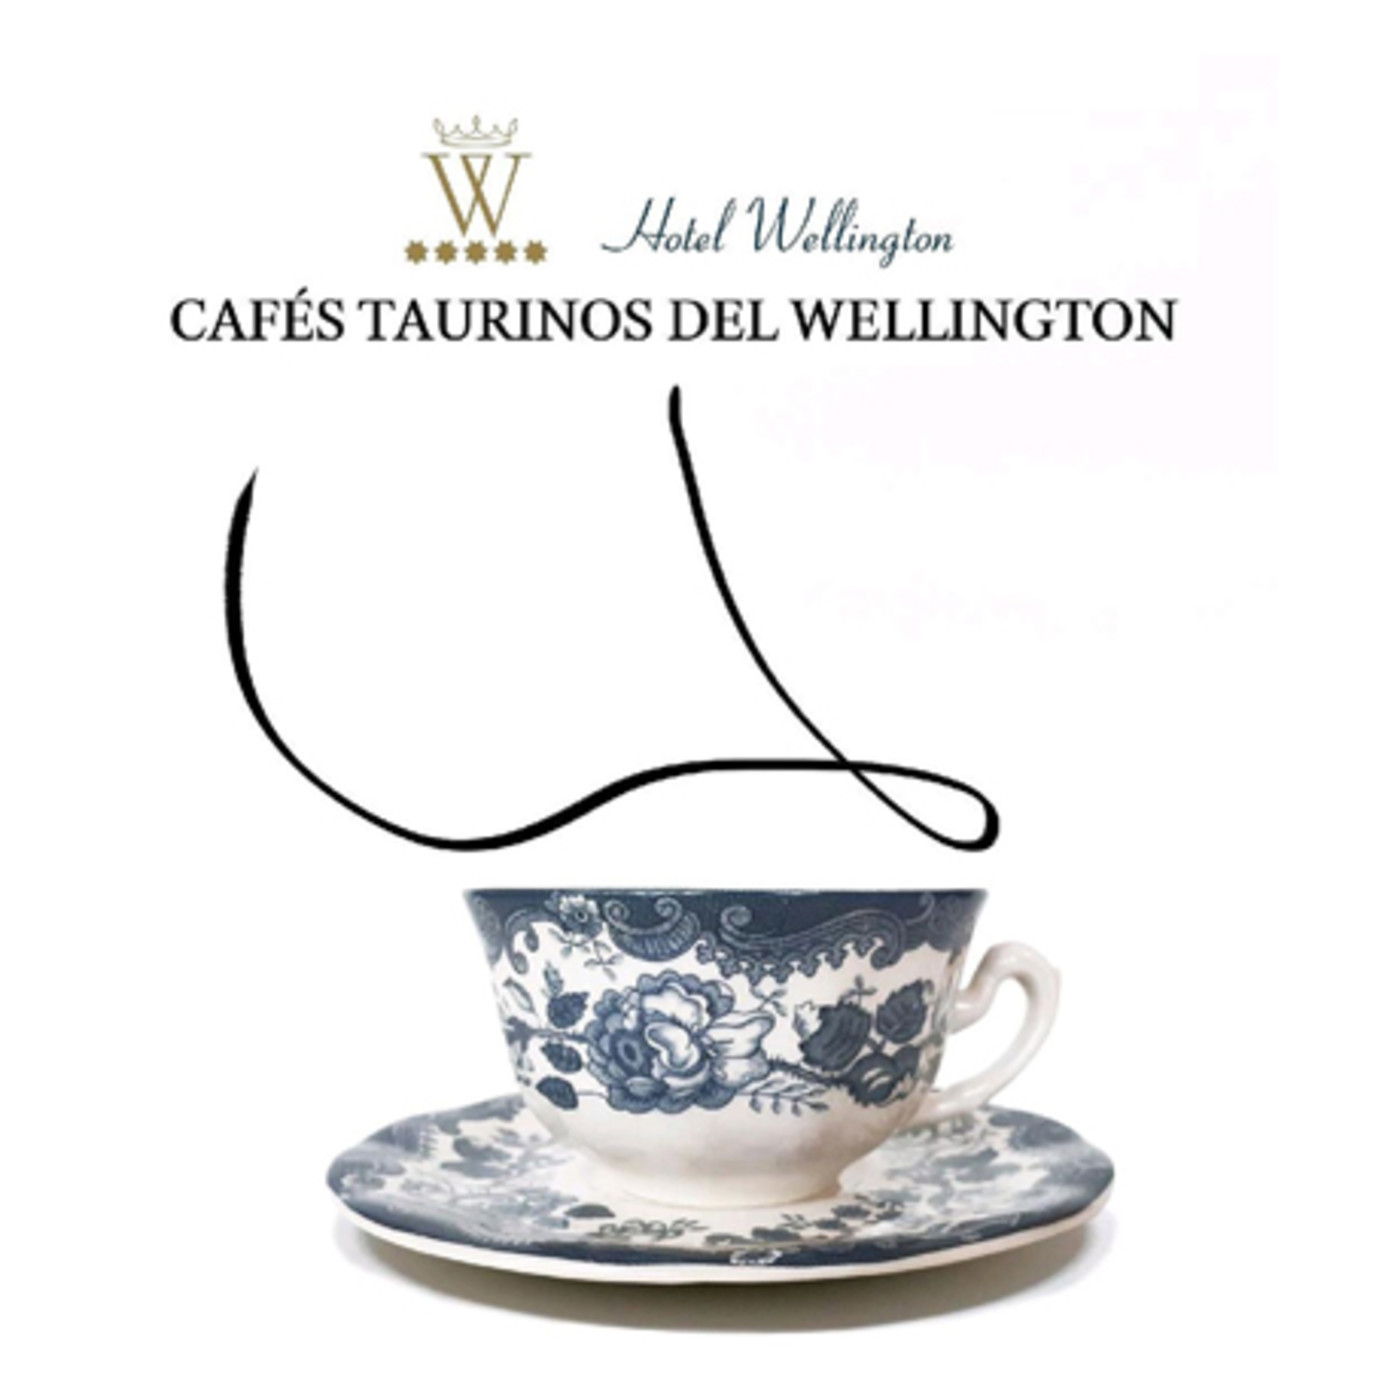 Cafés taurinos del Wellington